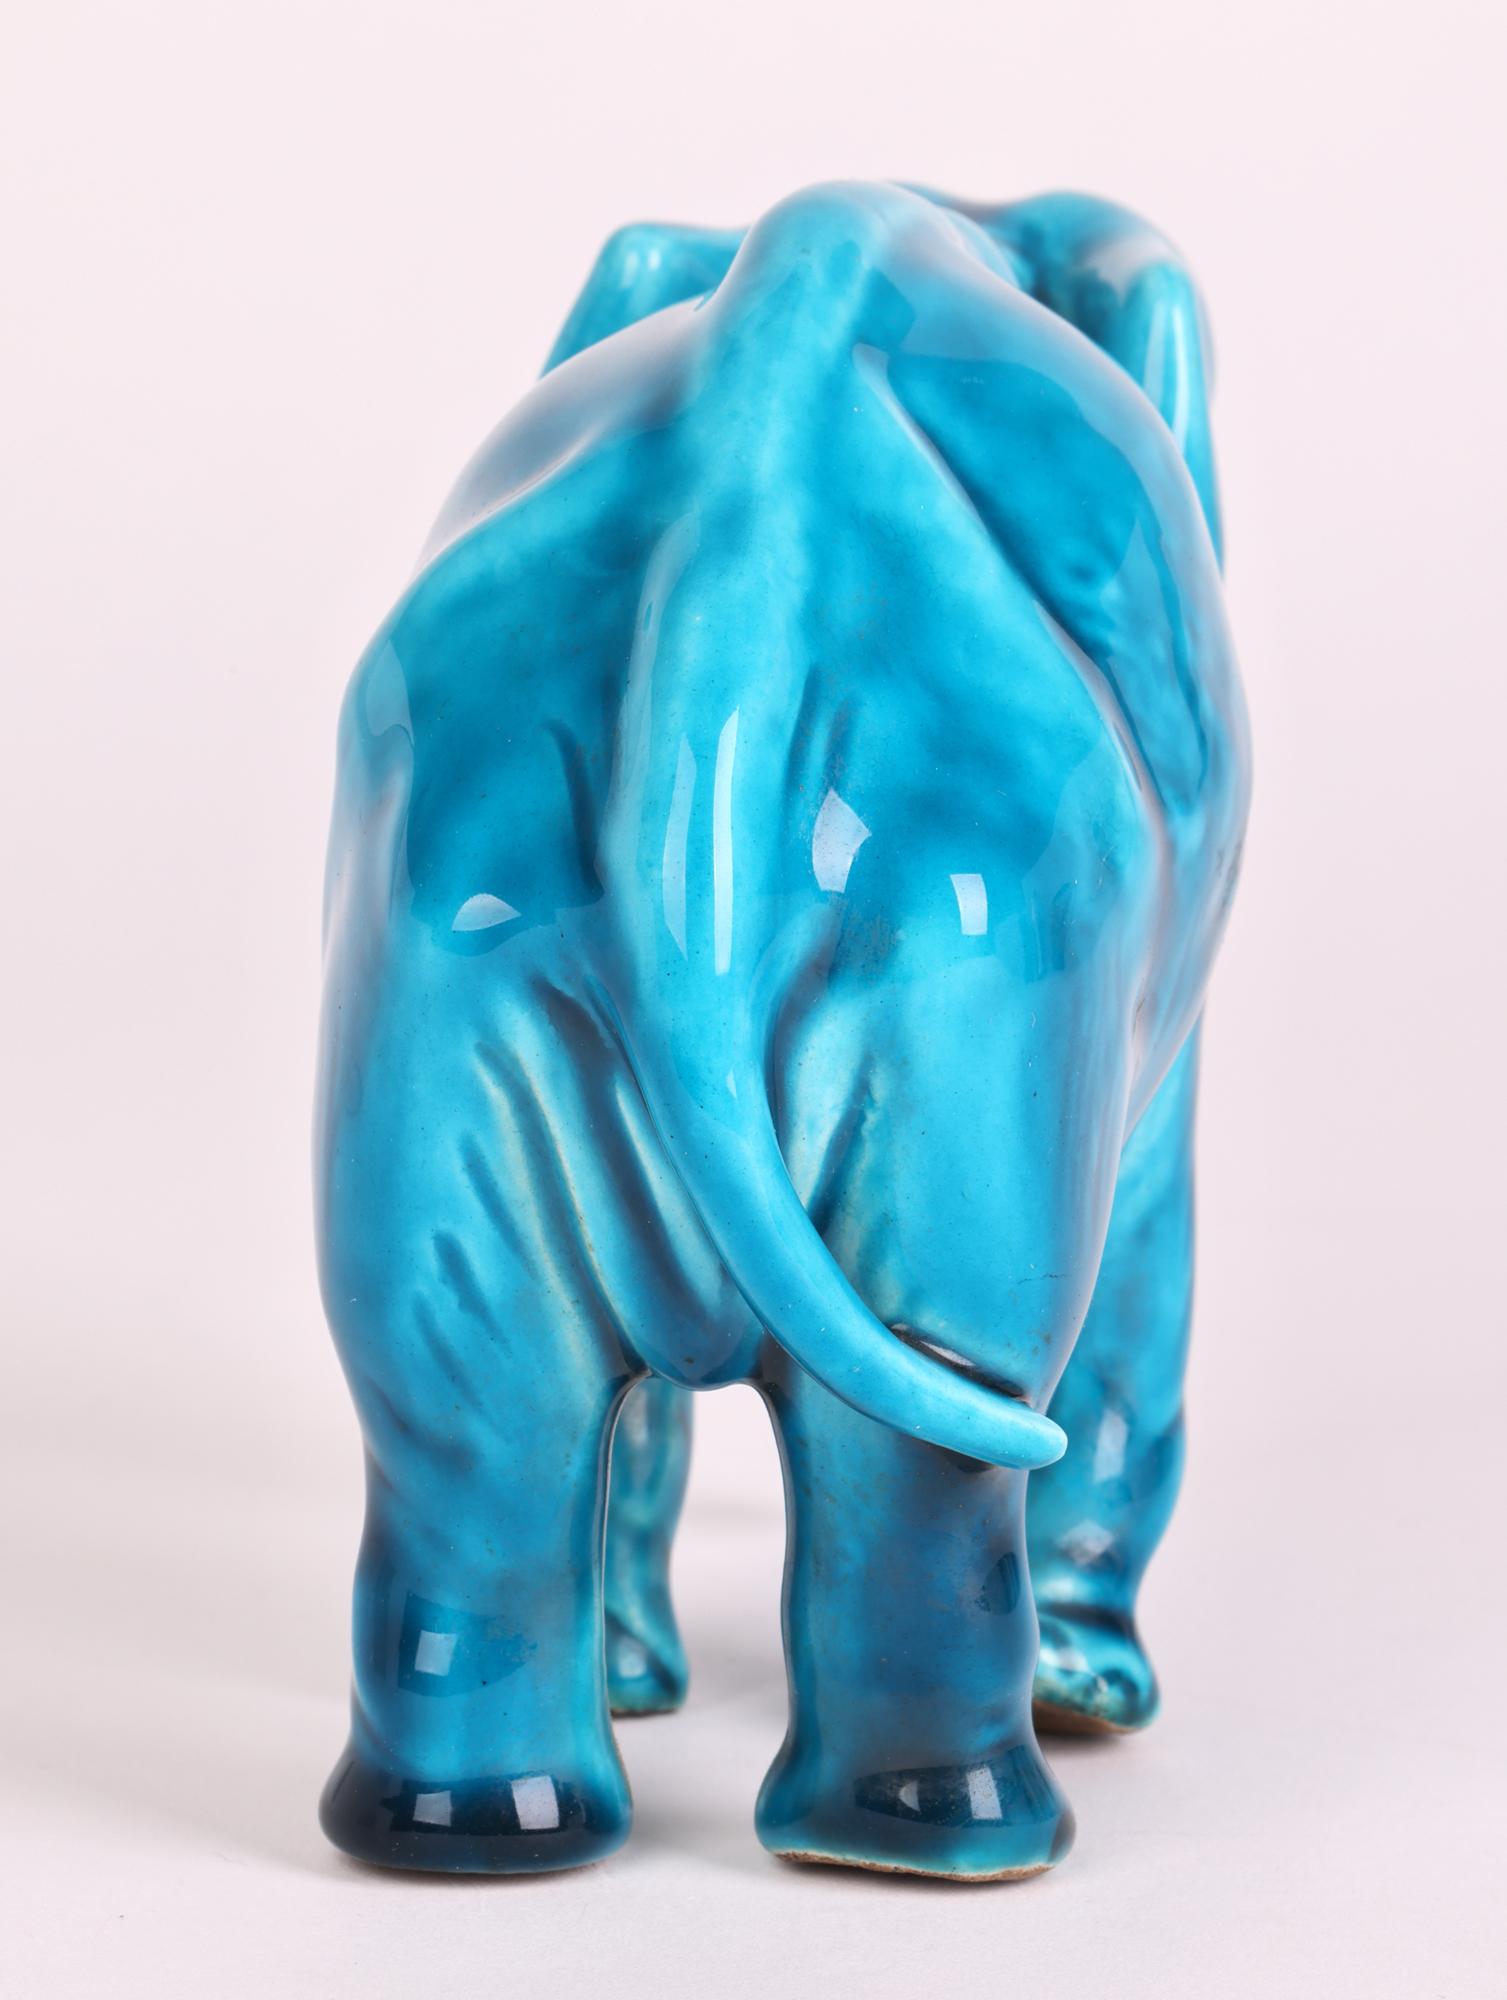 Paul Milet Sevres Turquoise Glazed Ceramic Elephant Figure    For Sale 3